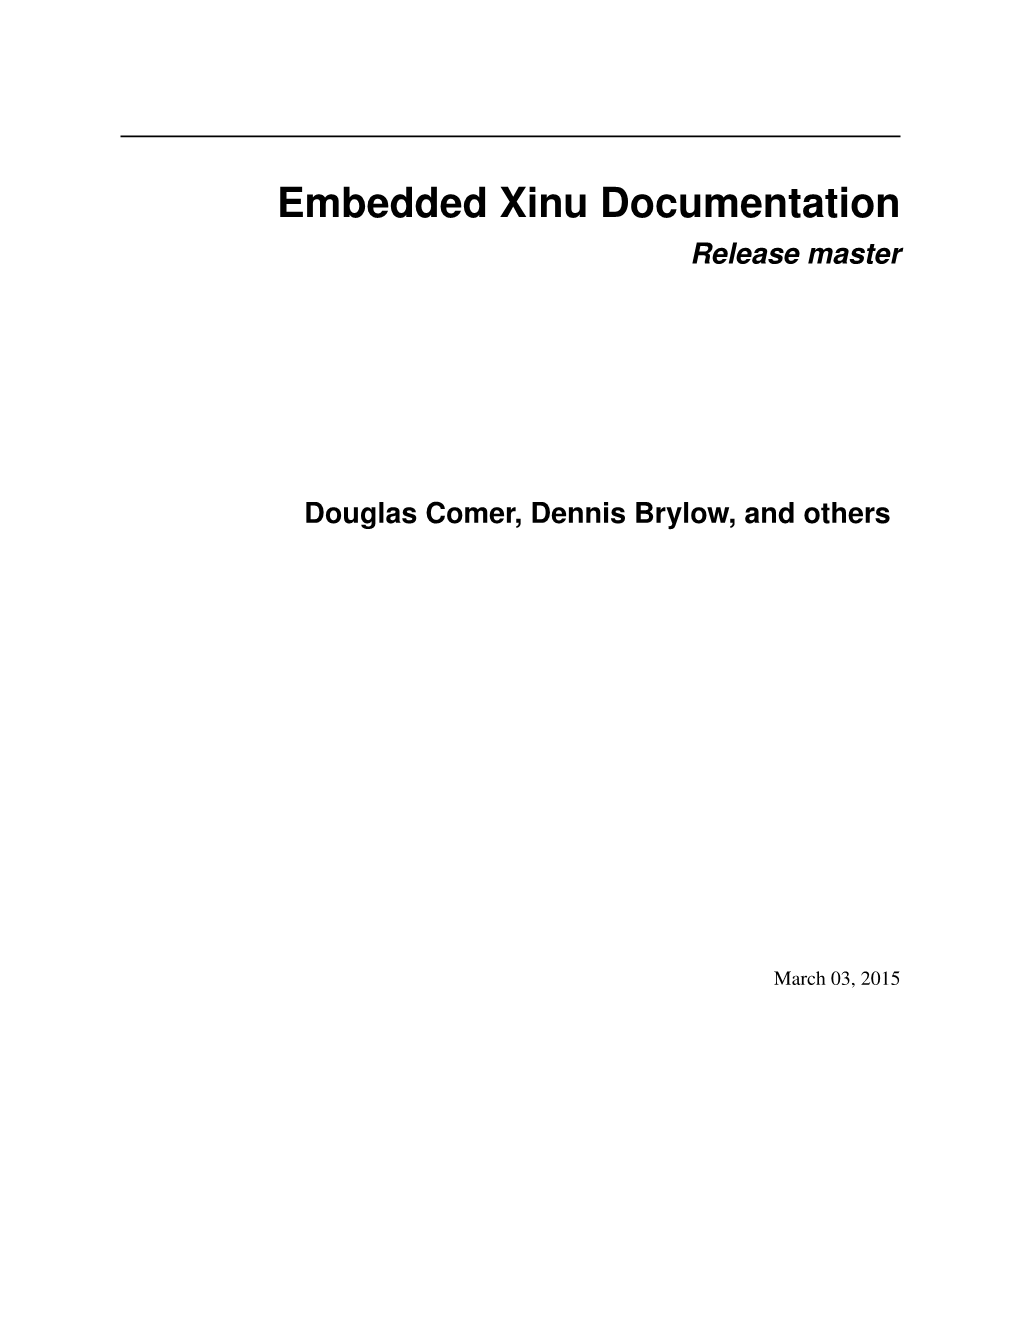 Embedded Xinu Documentation Release Master